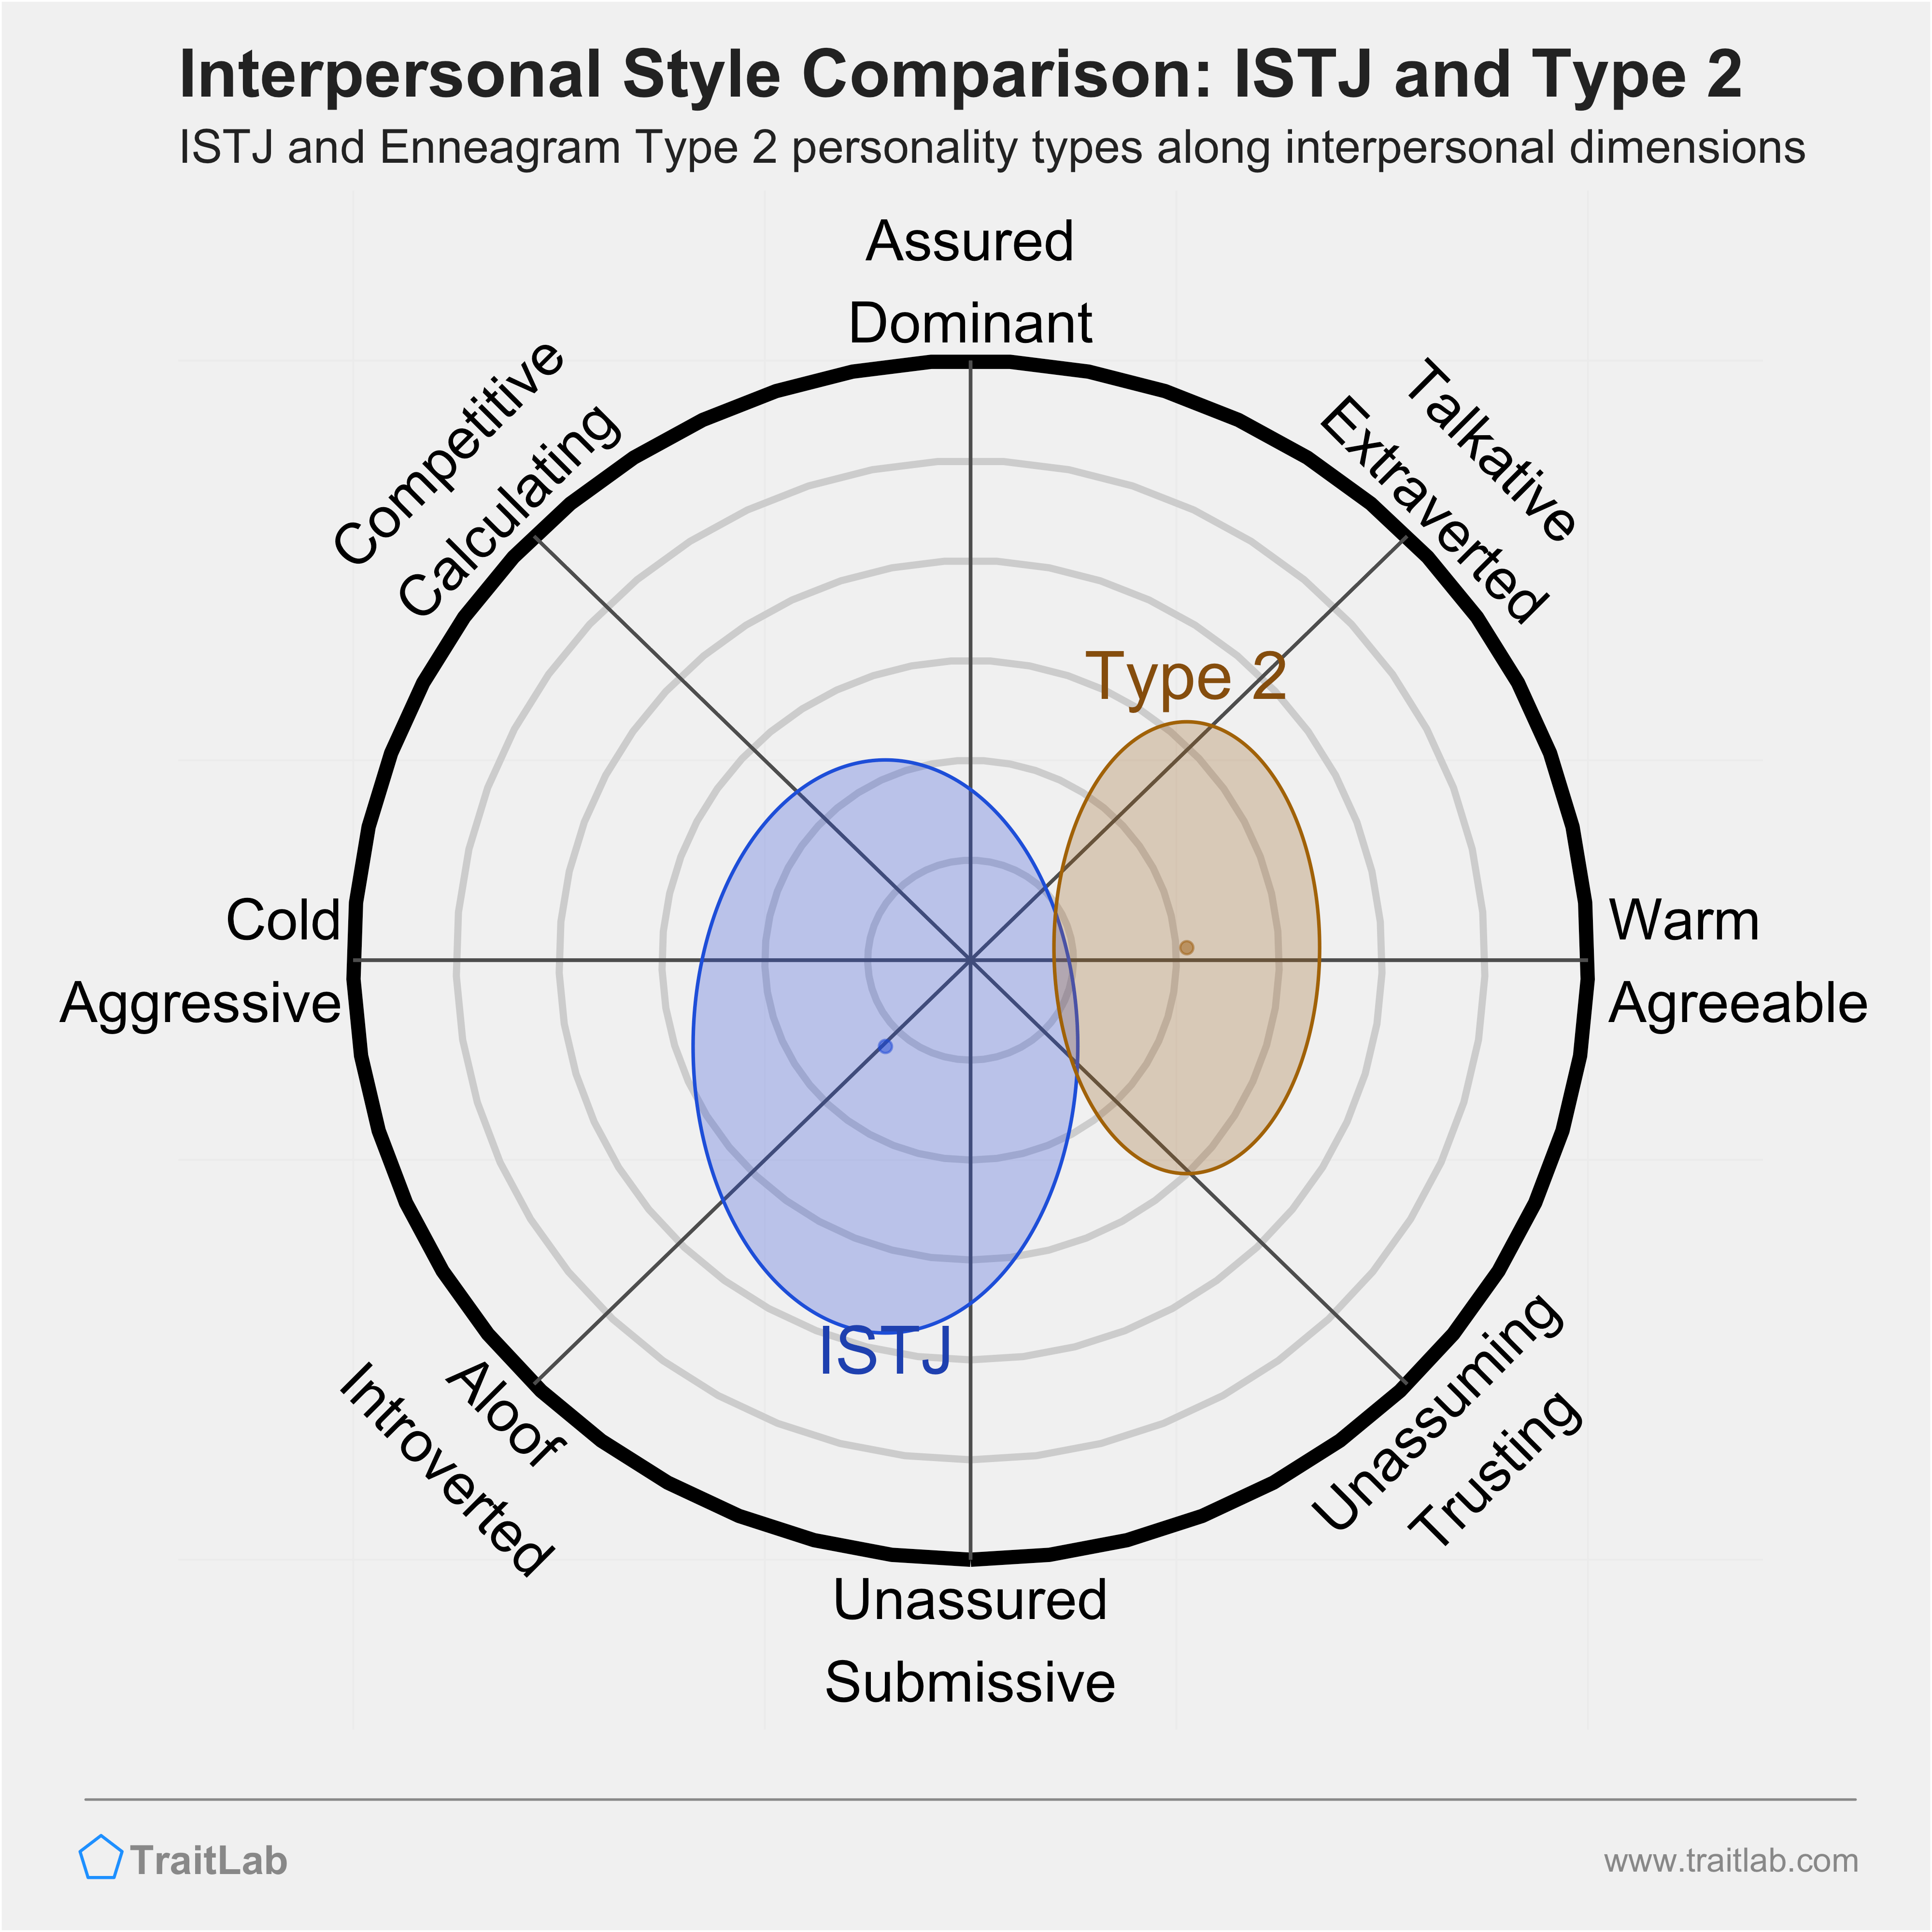 Enneagram ISTJ and Type 2 comparison across interpersonal dimensions